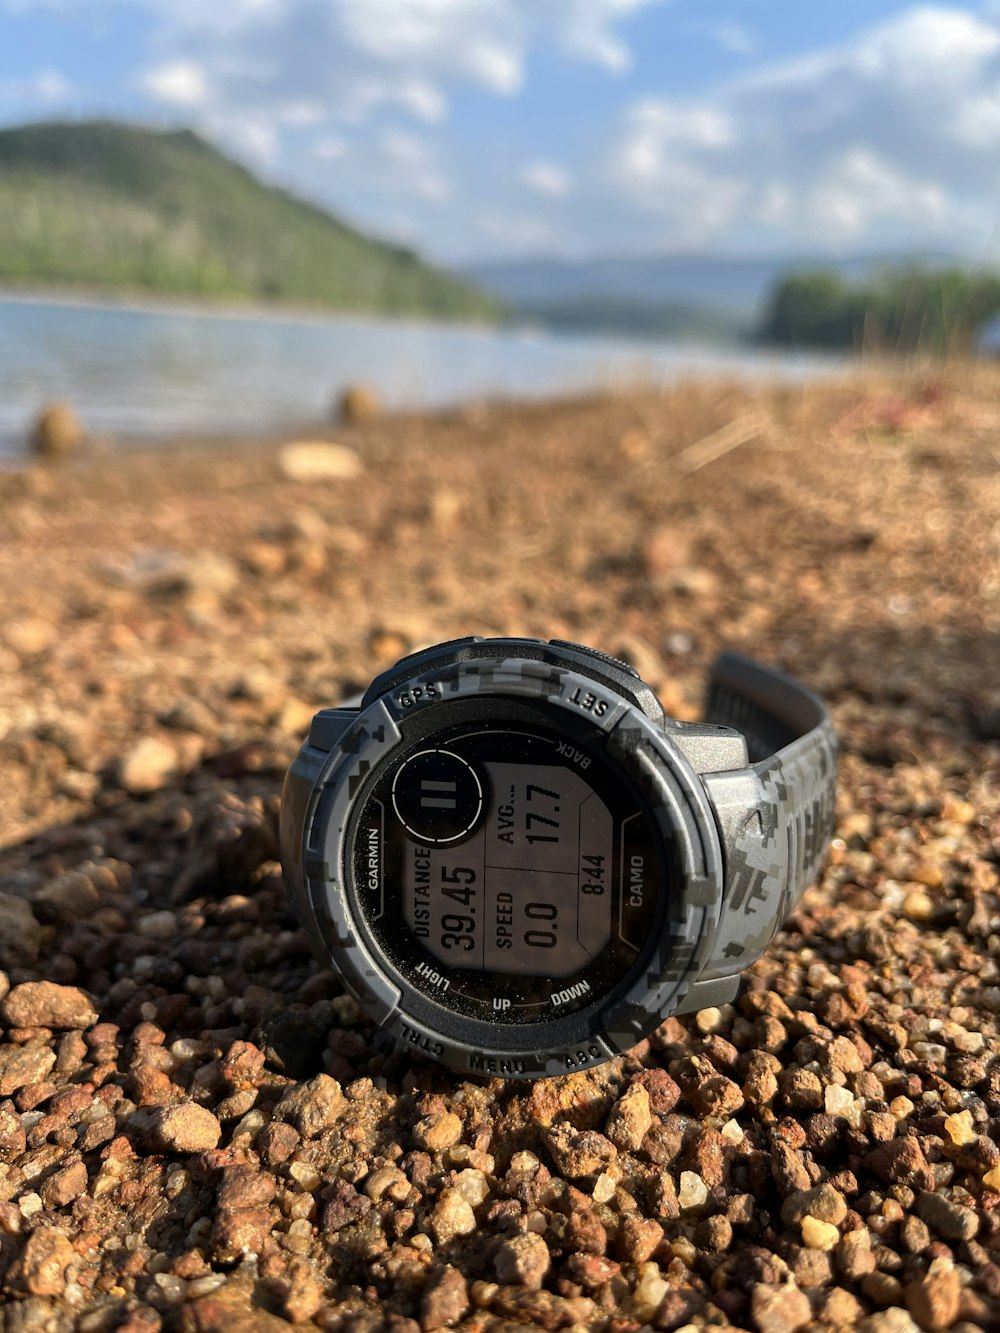 a close up of a watch on a rocky beach